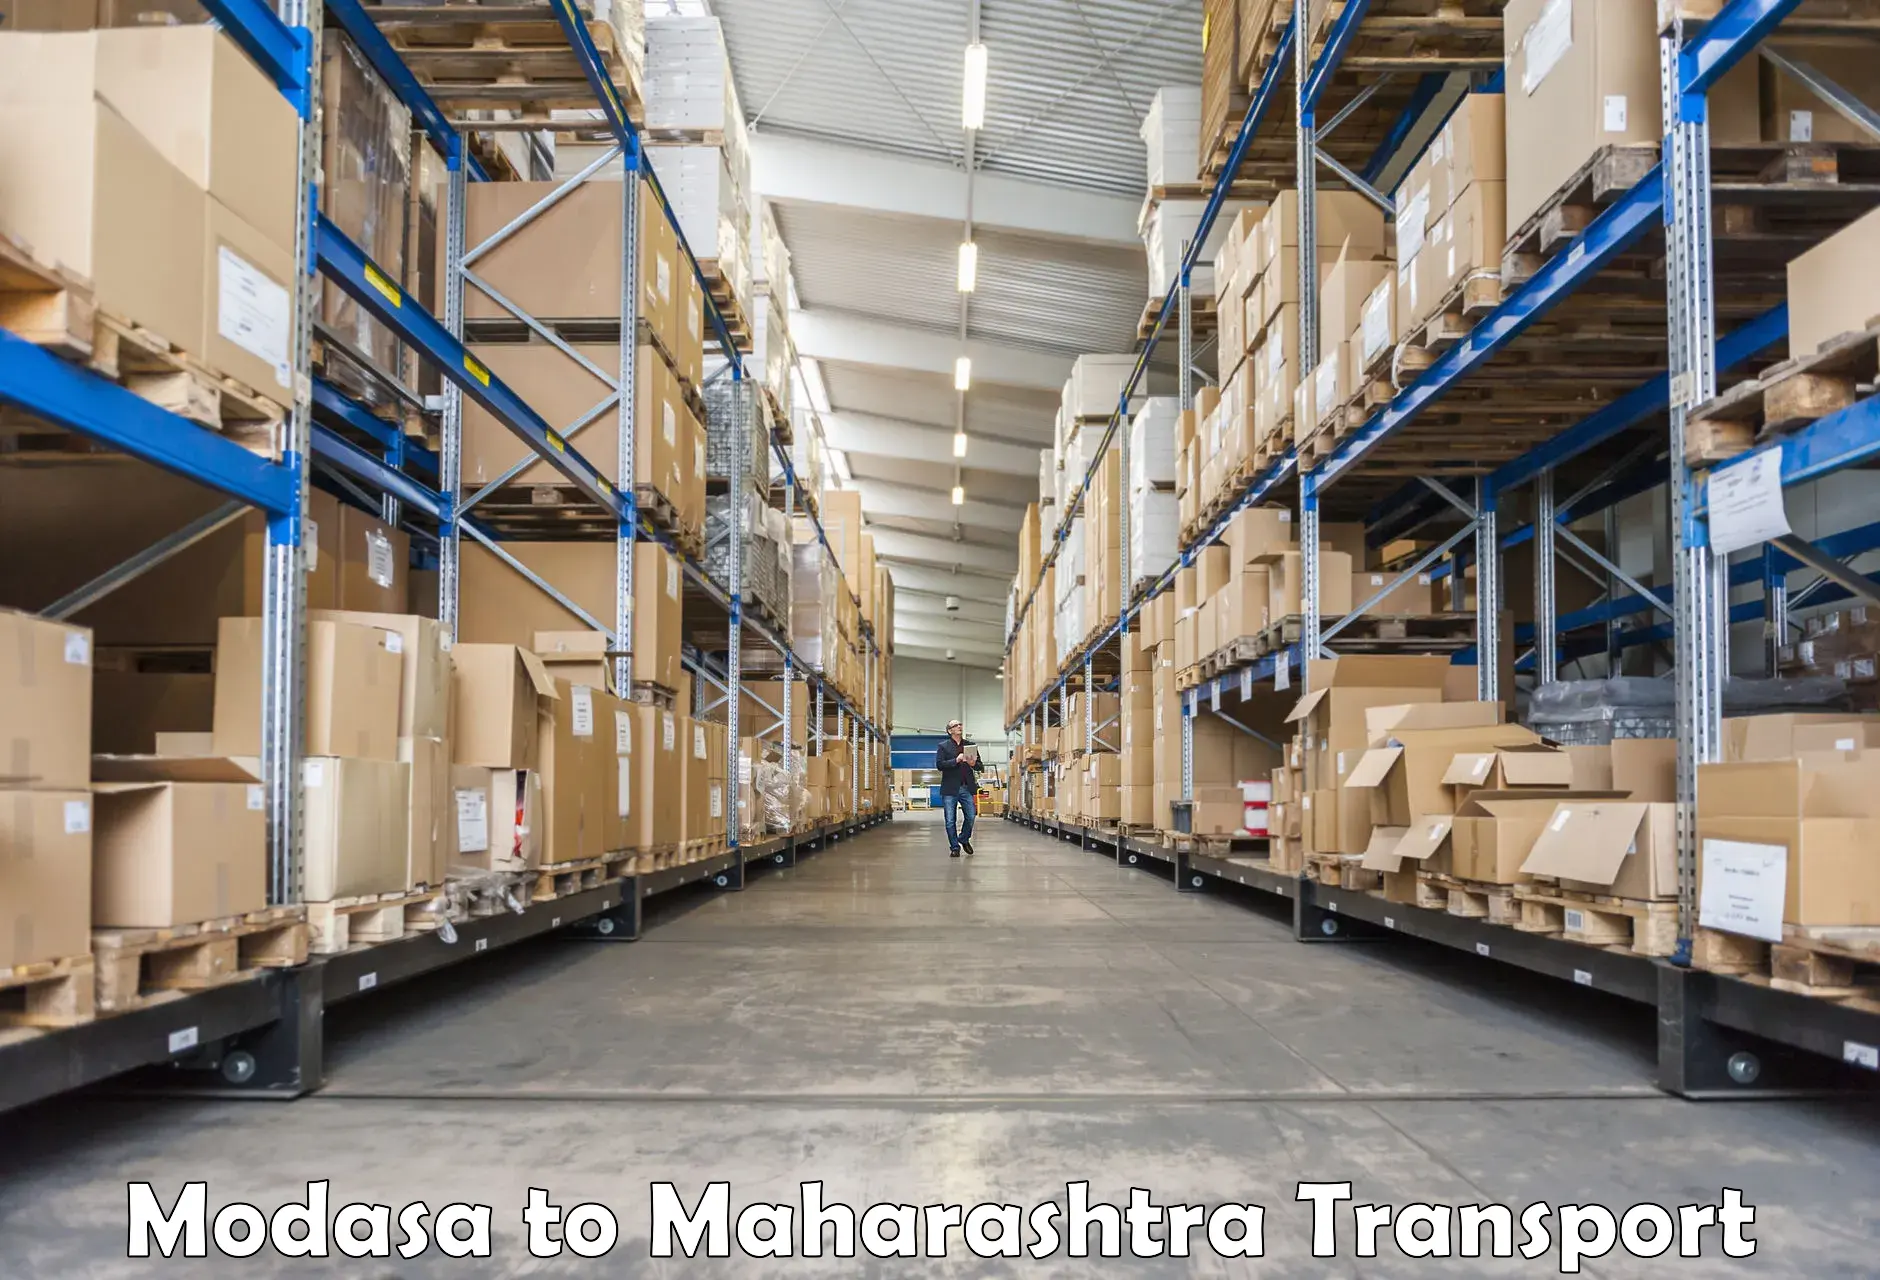 Truck transport companies in India Modasa to Nashik